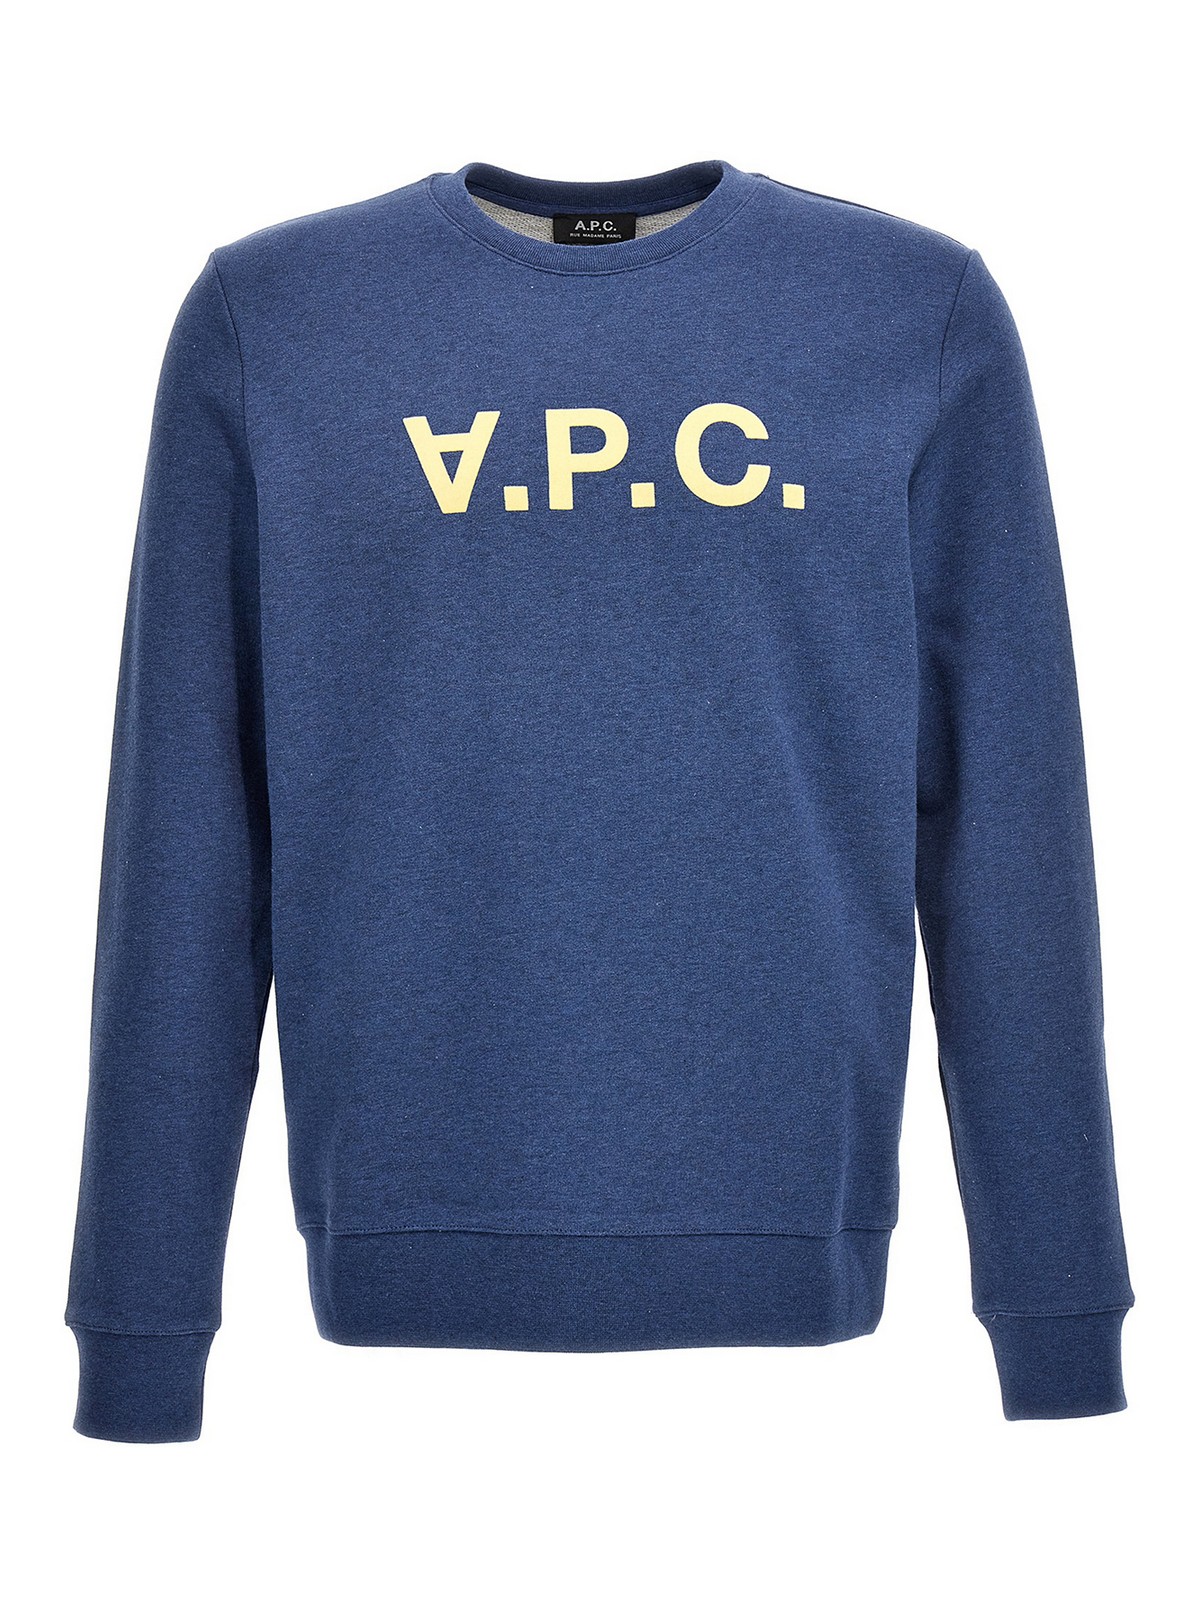 Apc Sweatshirt In Blue